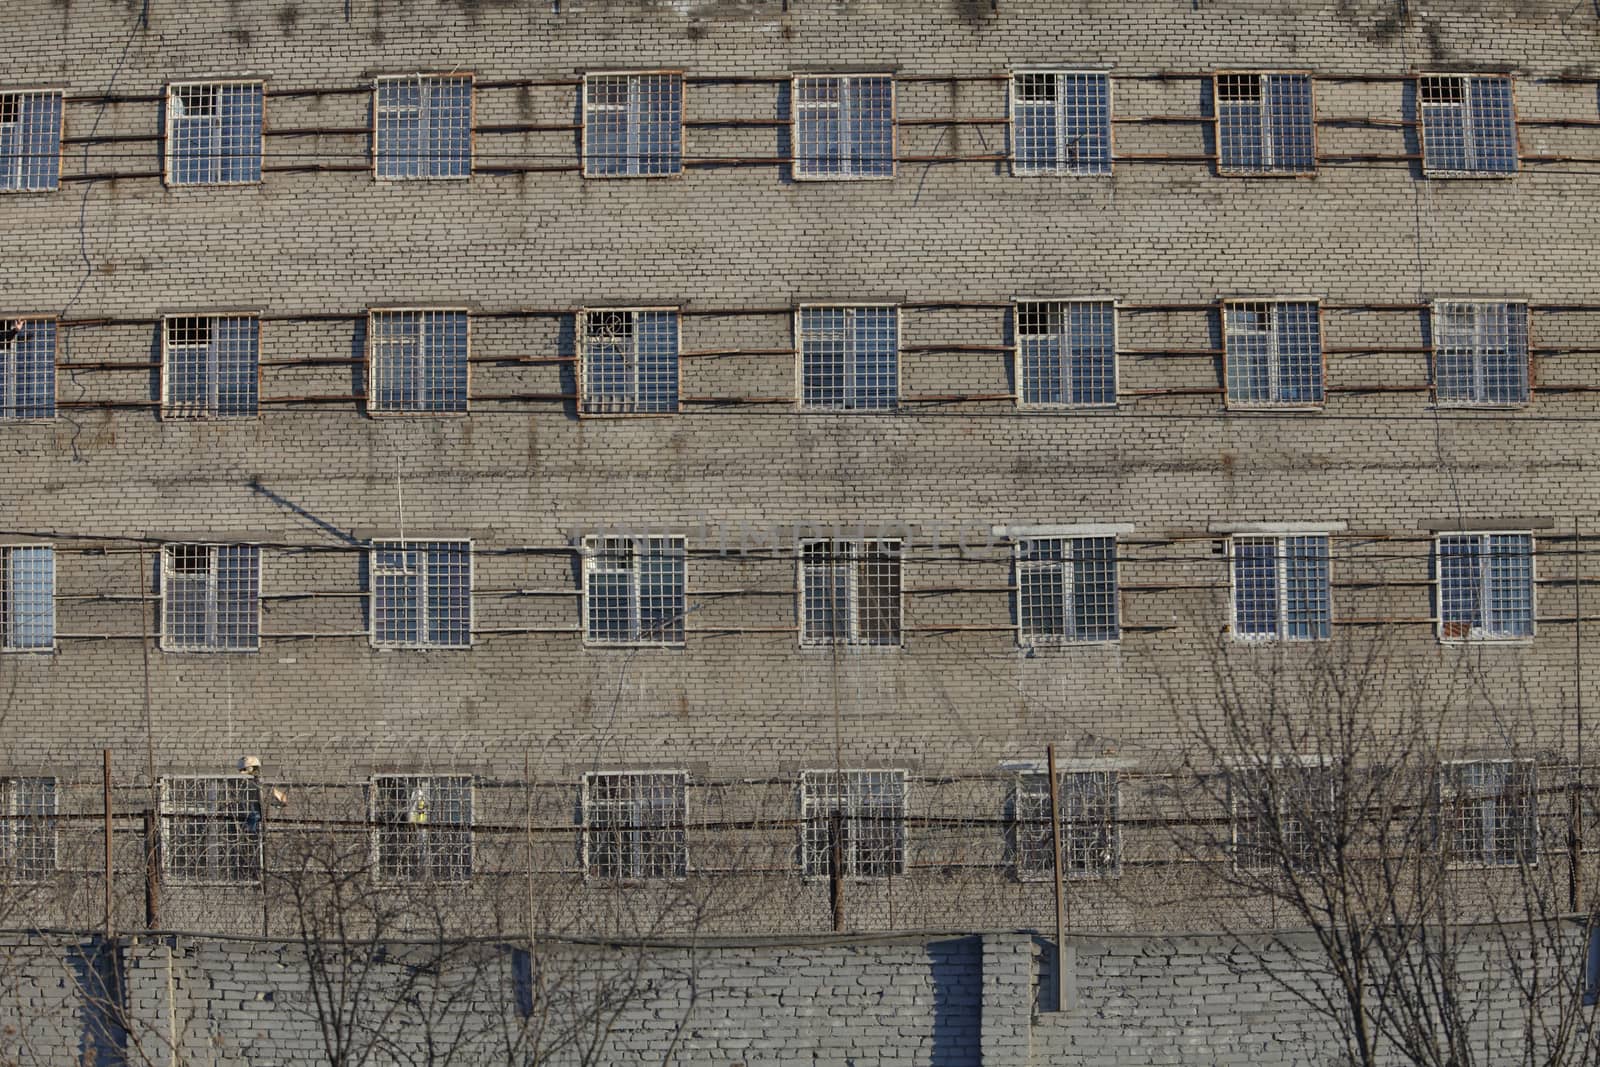 Gratings on windows prison by mrivserg